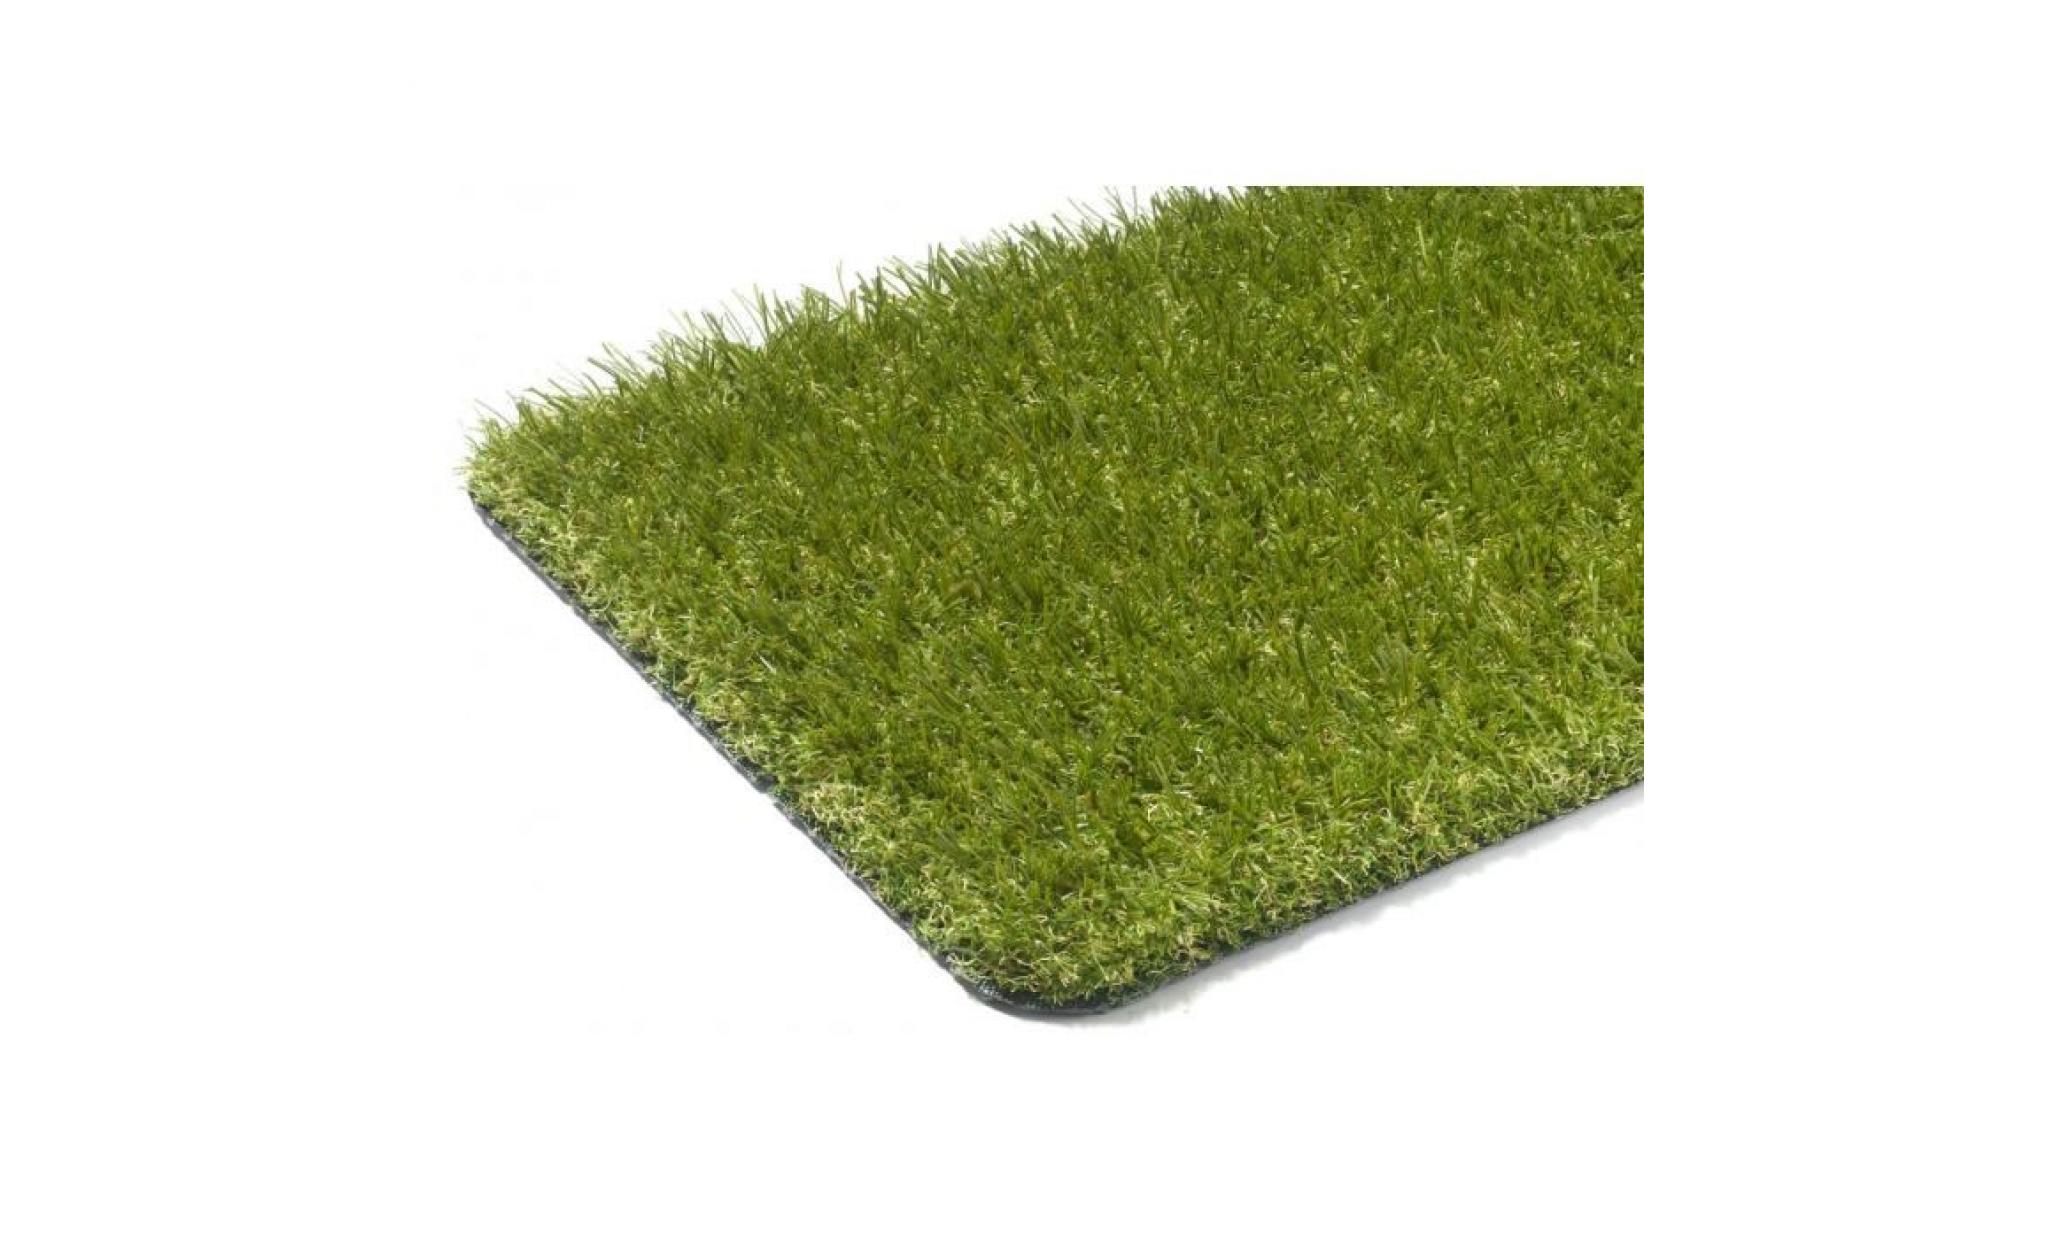 wembley   tapis type luxe gazon artificiel – pour jardin, terrasse, balcon   vert  [200x150 cm]